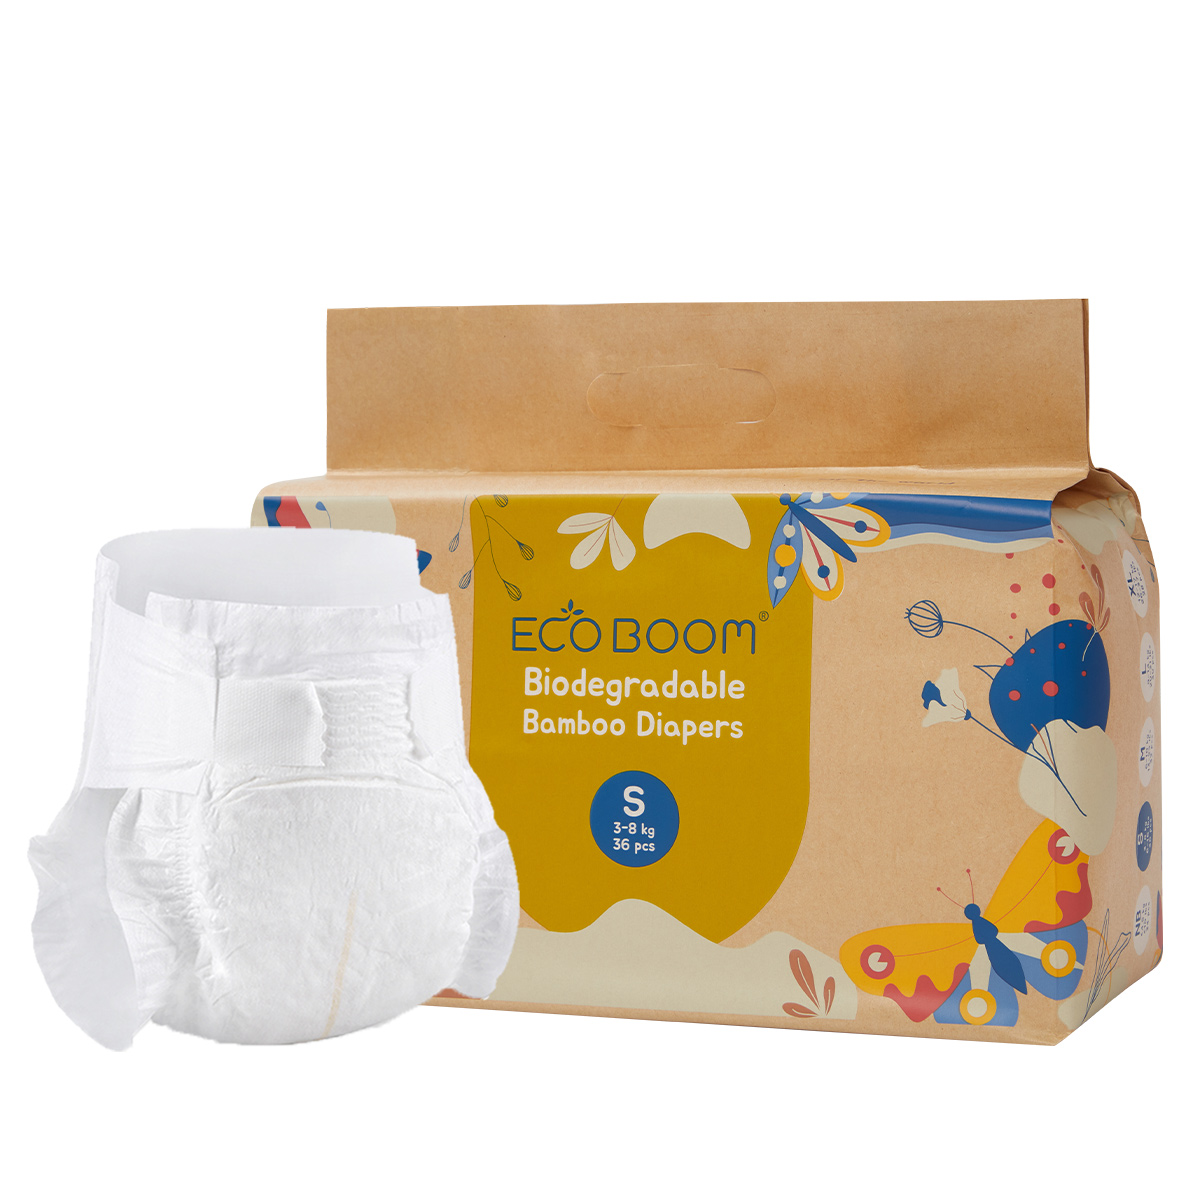 ECO BOOM bamboo baby diaper distribution-1